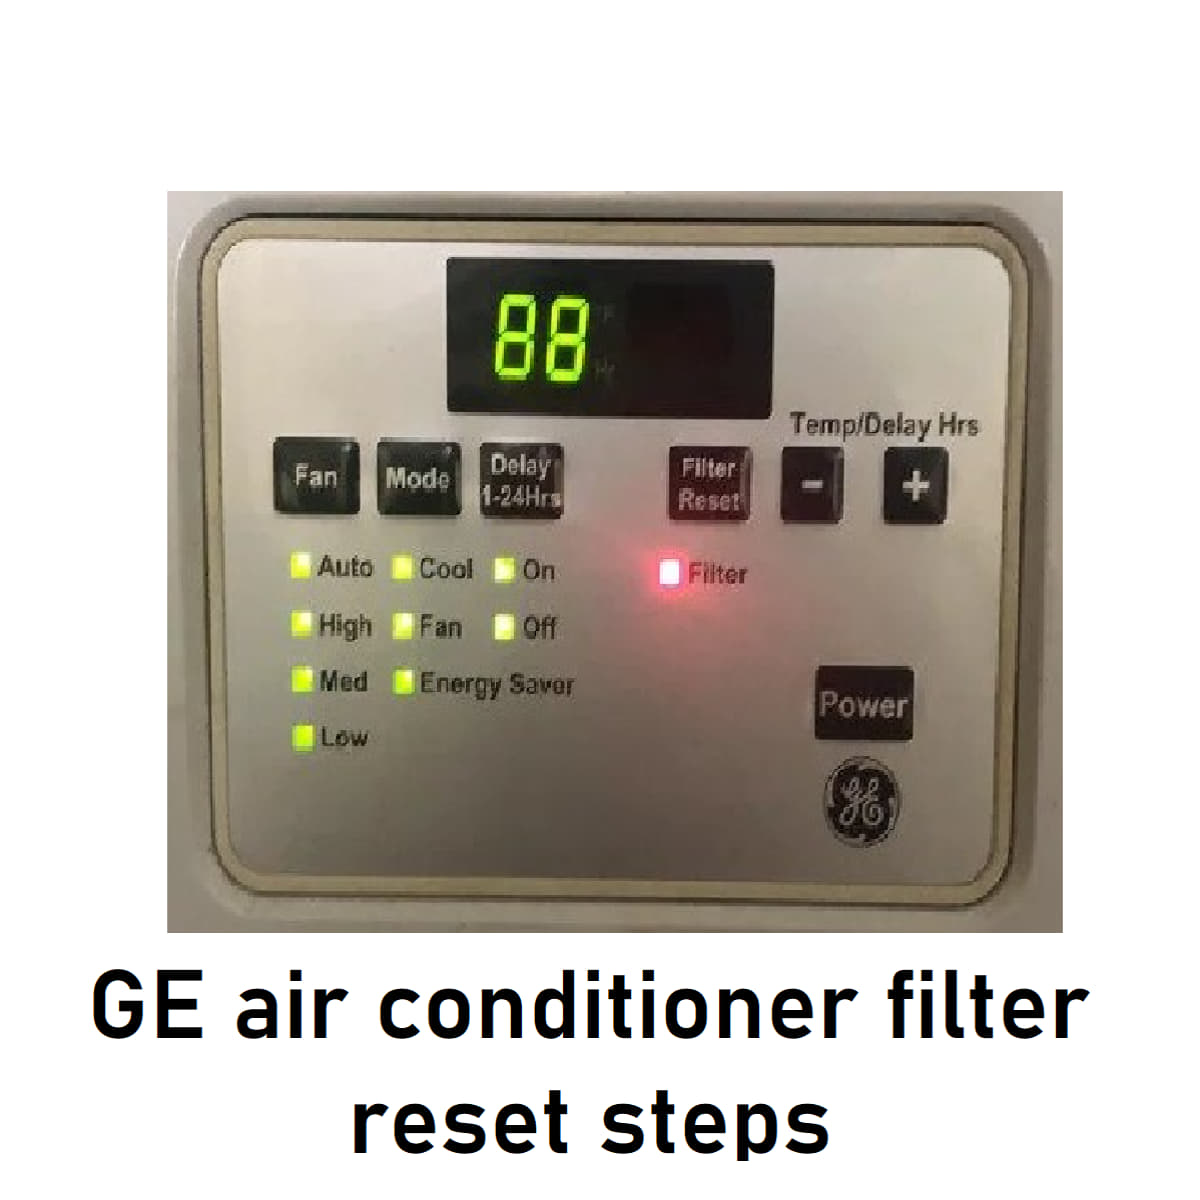 GE air conditioner filter reset